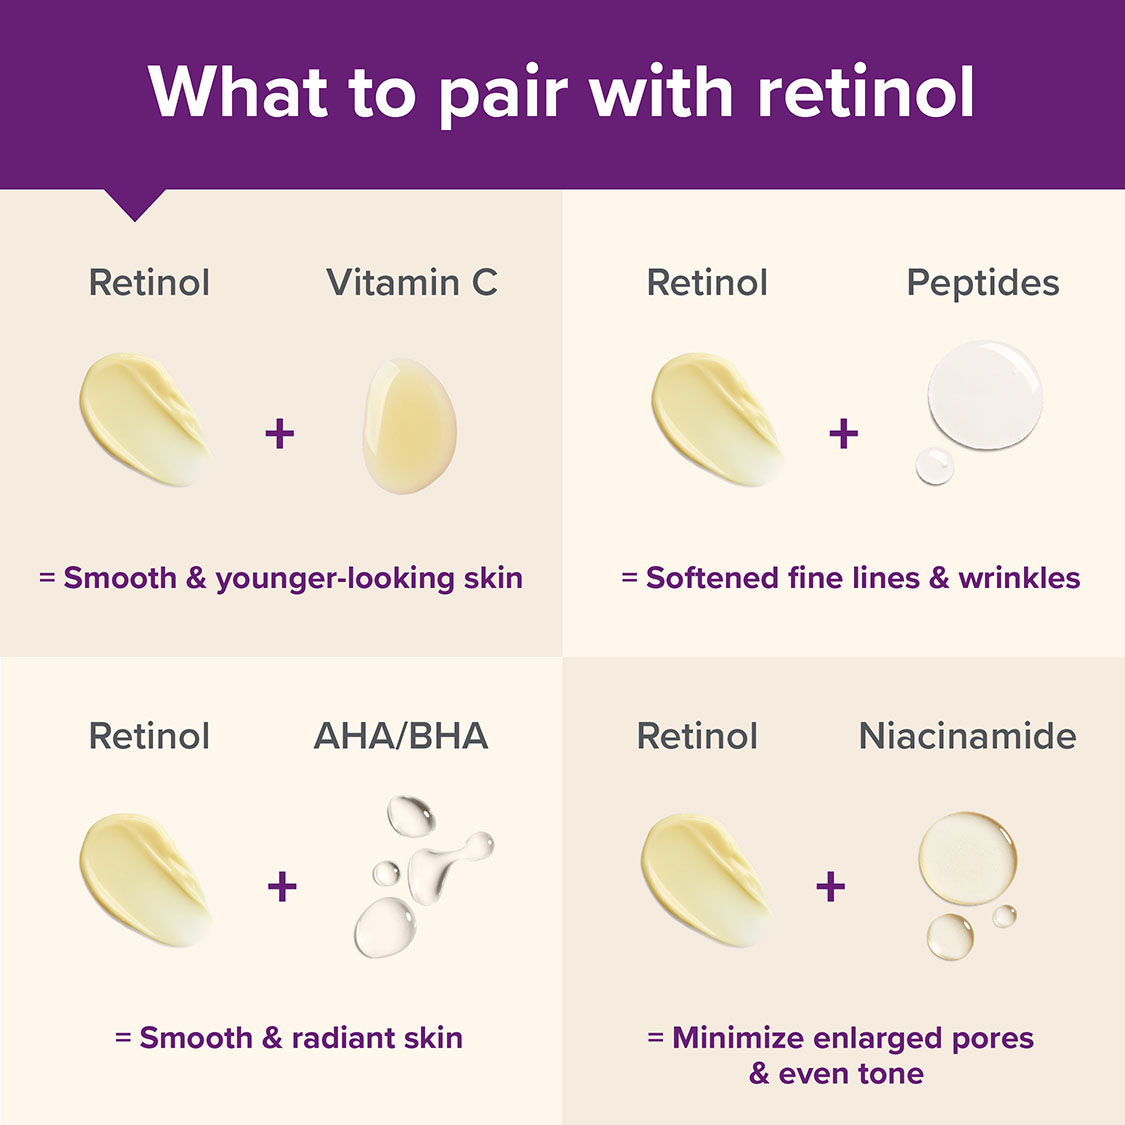 What to pair with retinol